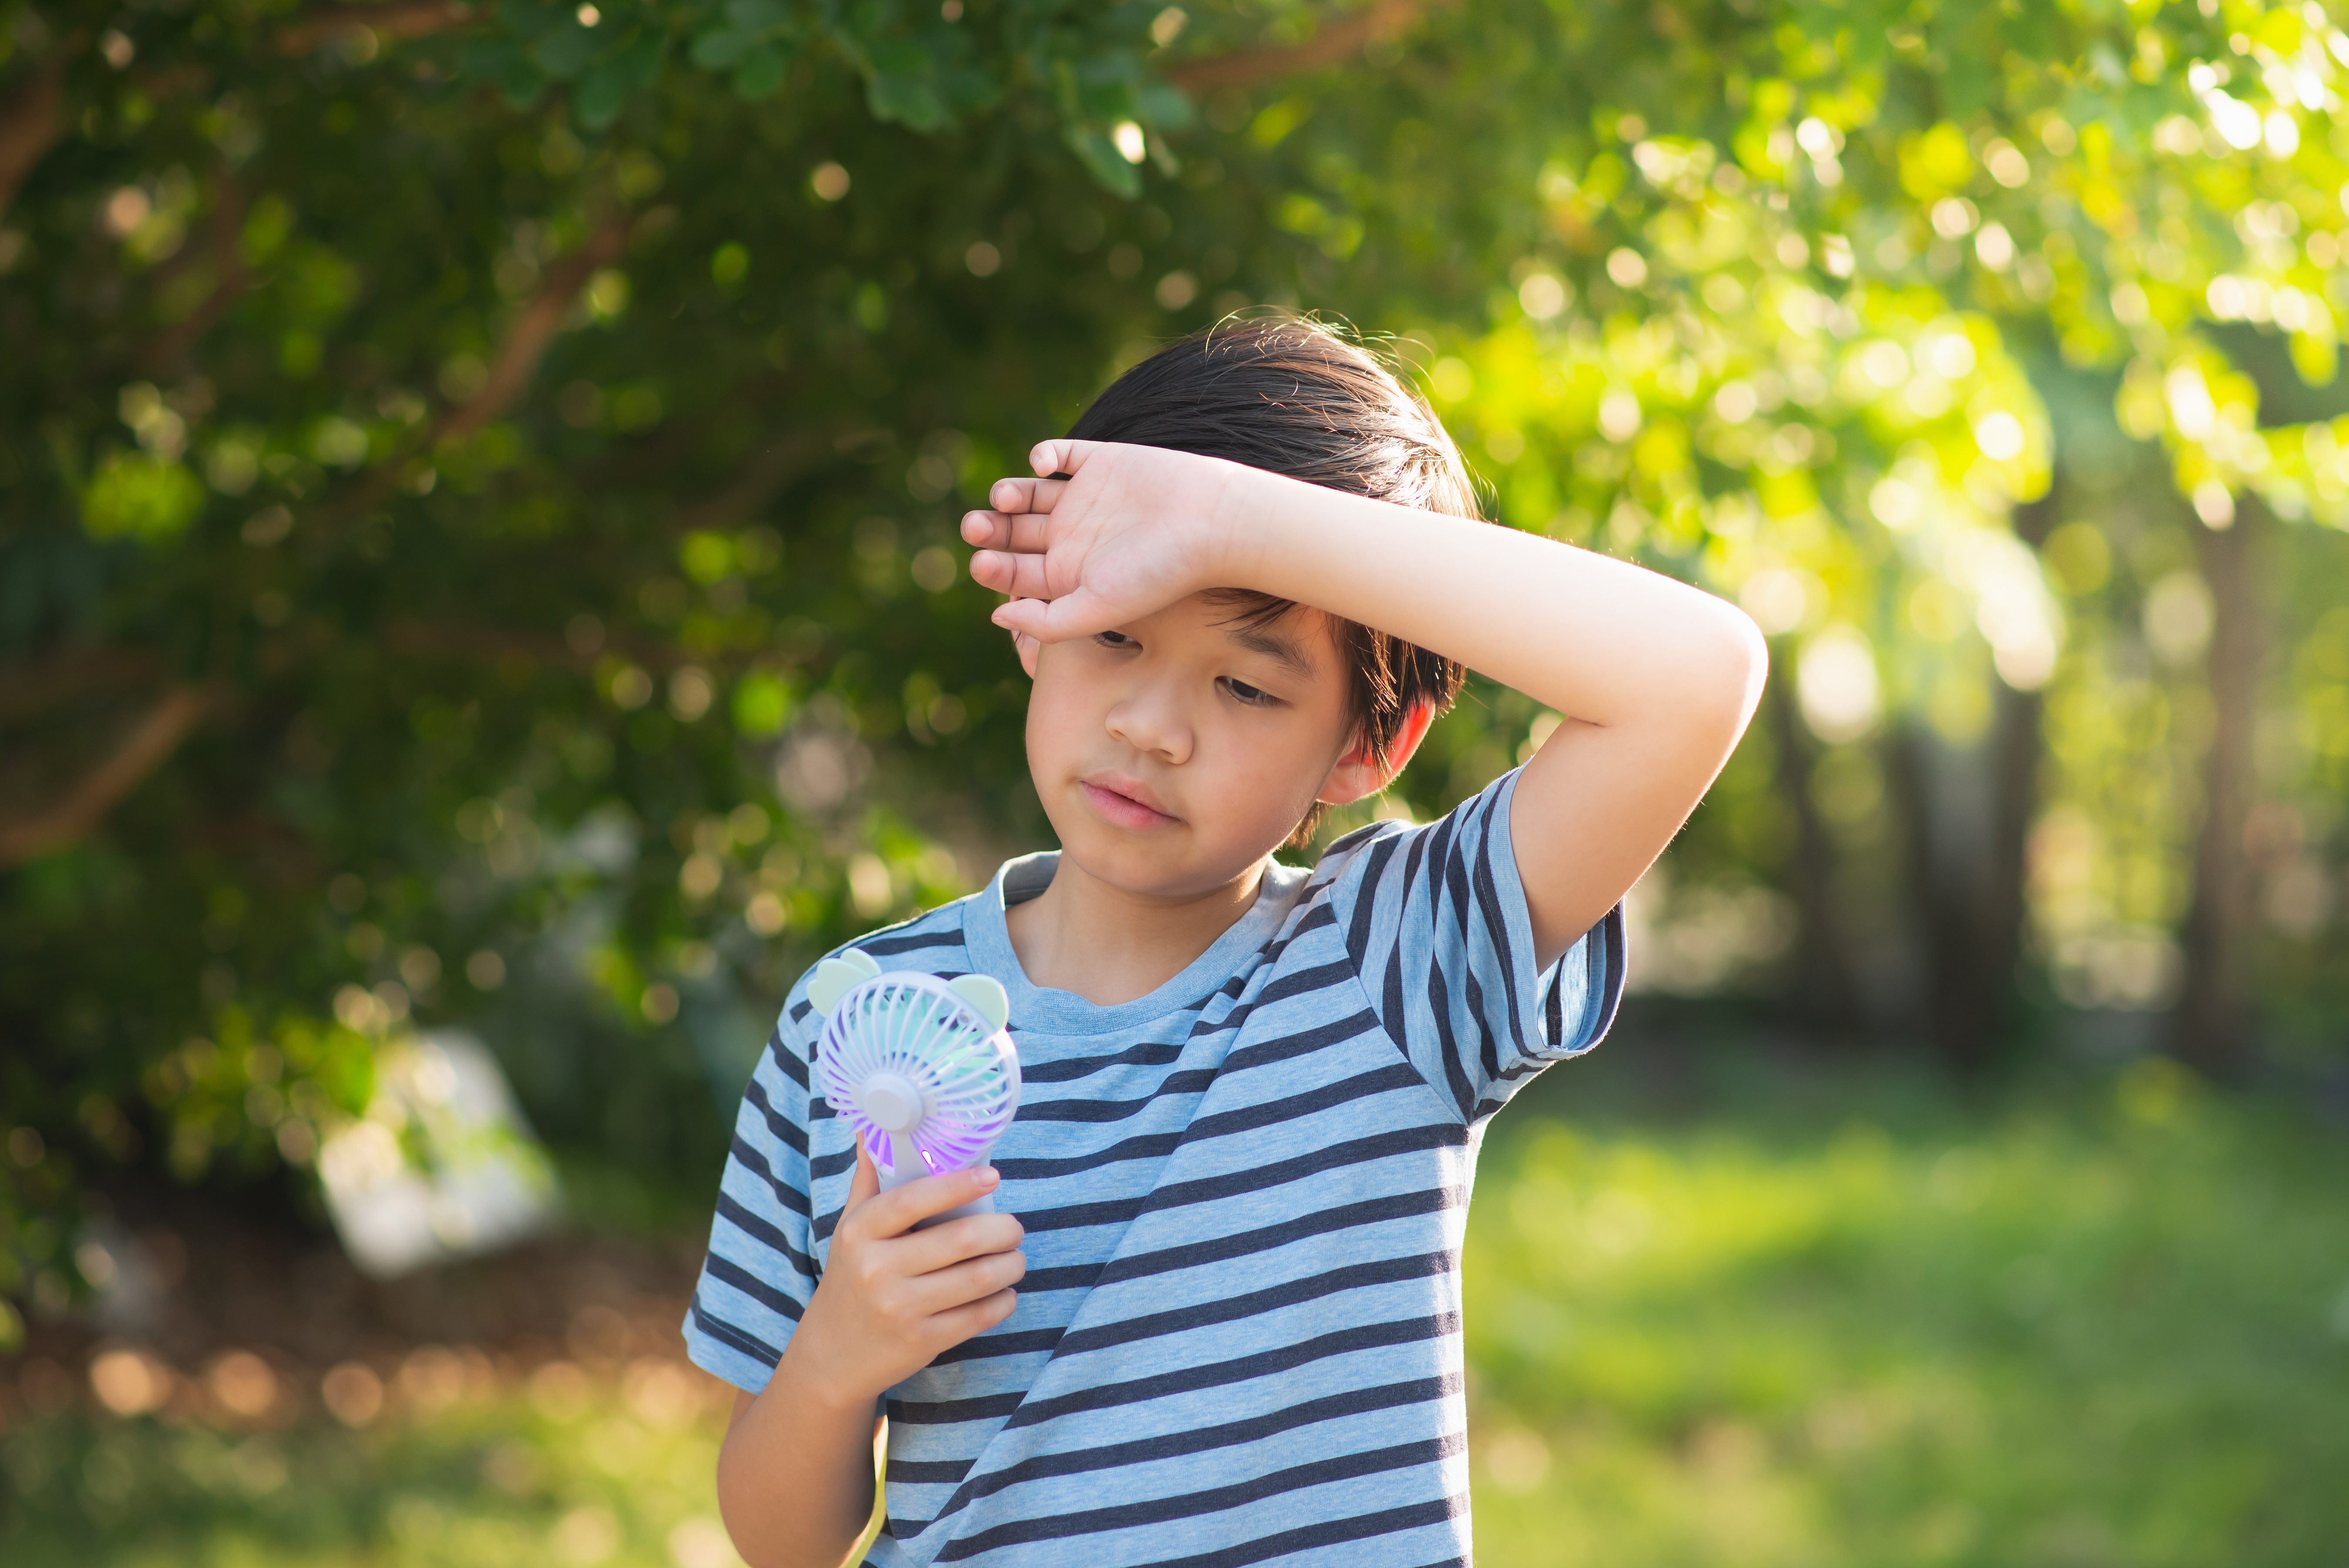 Heat Stroke in Children